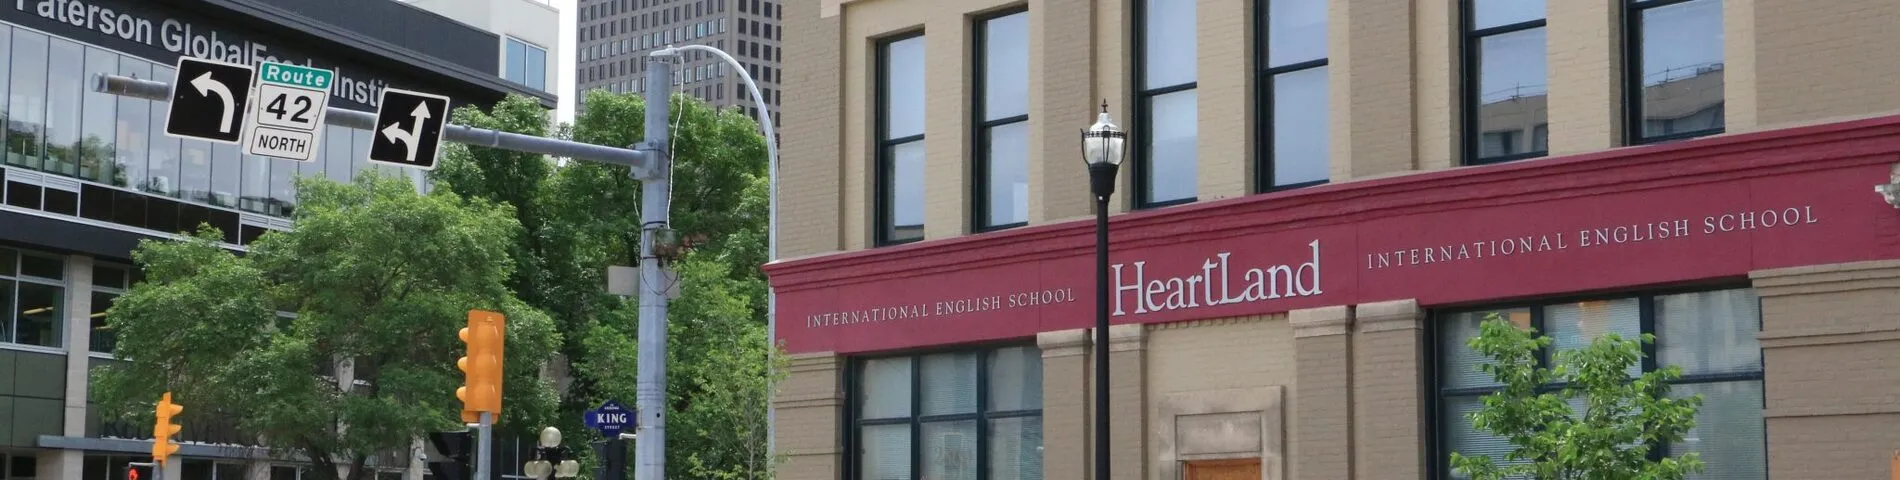 Heartland International English School immagine 1